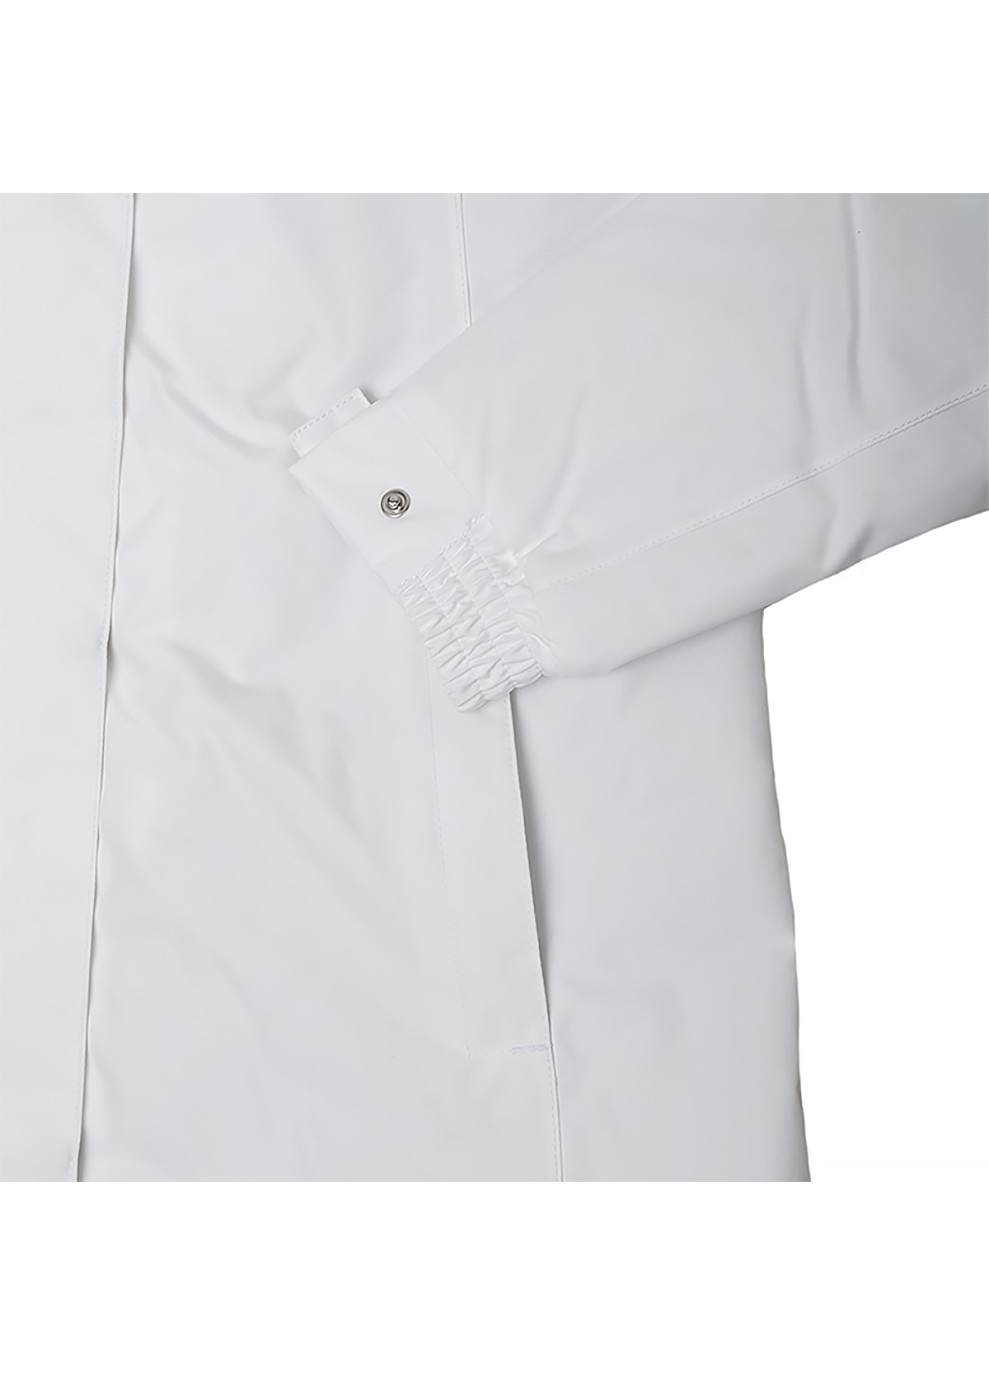 Біла демісезонна жіноча куртка w aden insulated coat білий Helly Hansen